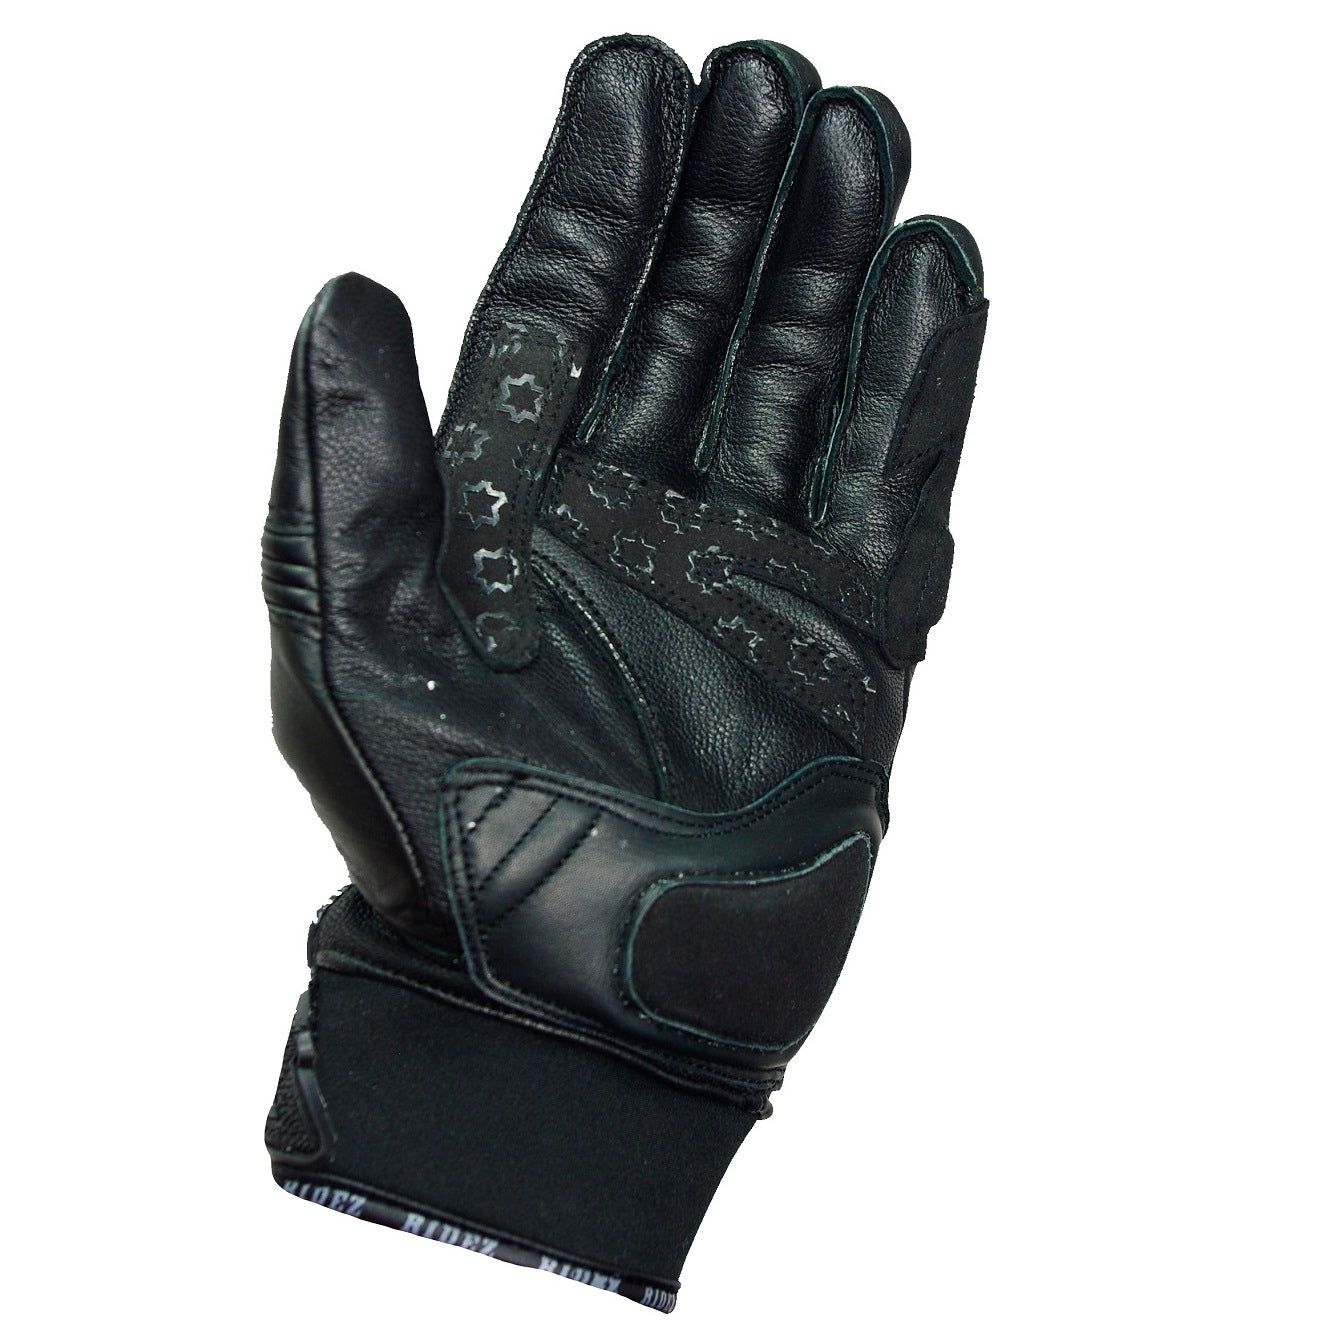 RIDEZ QUASAR GLOVES BLACK wide RLG263 Motorcycle gloves